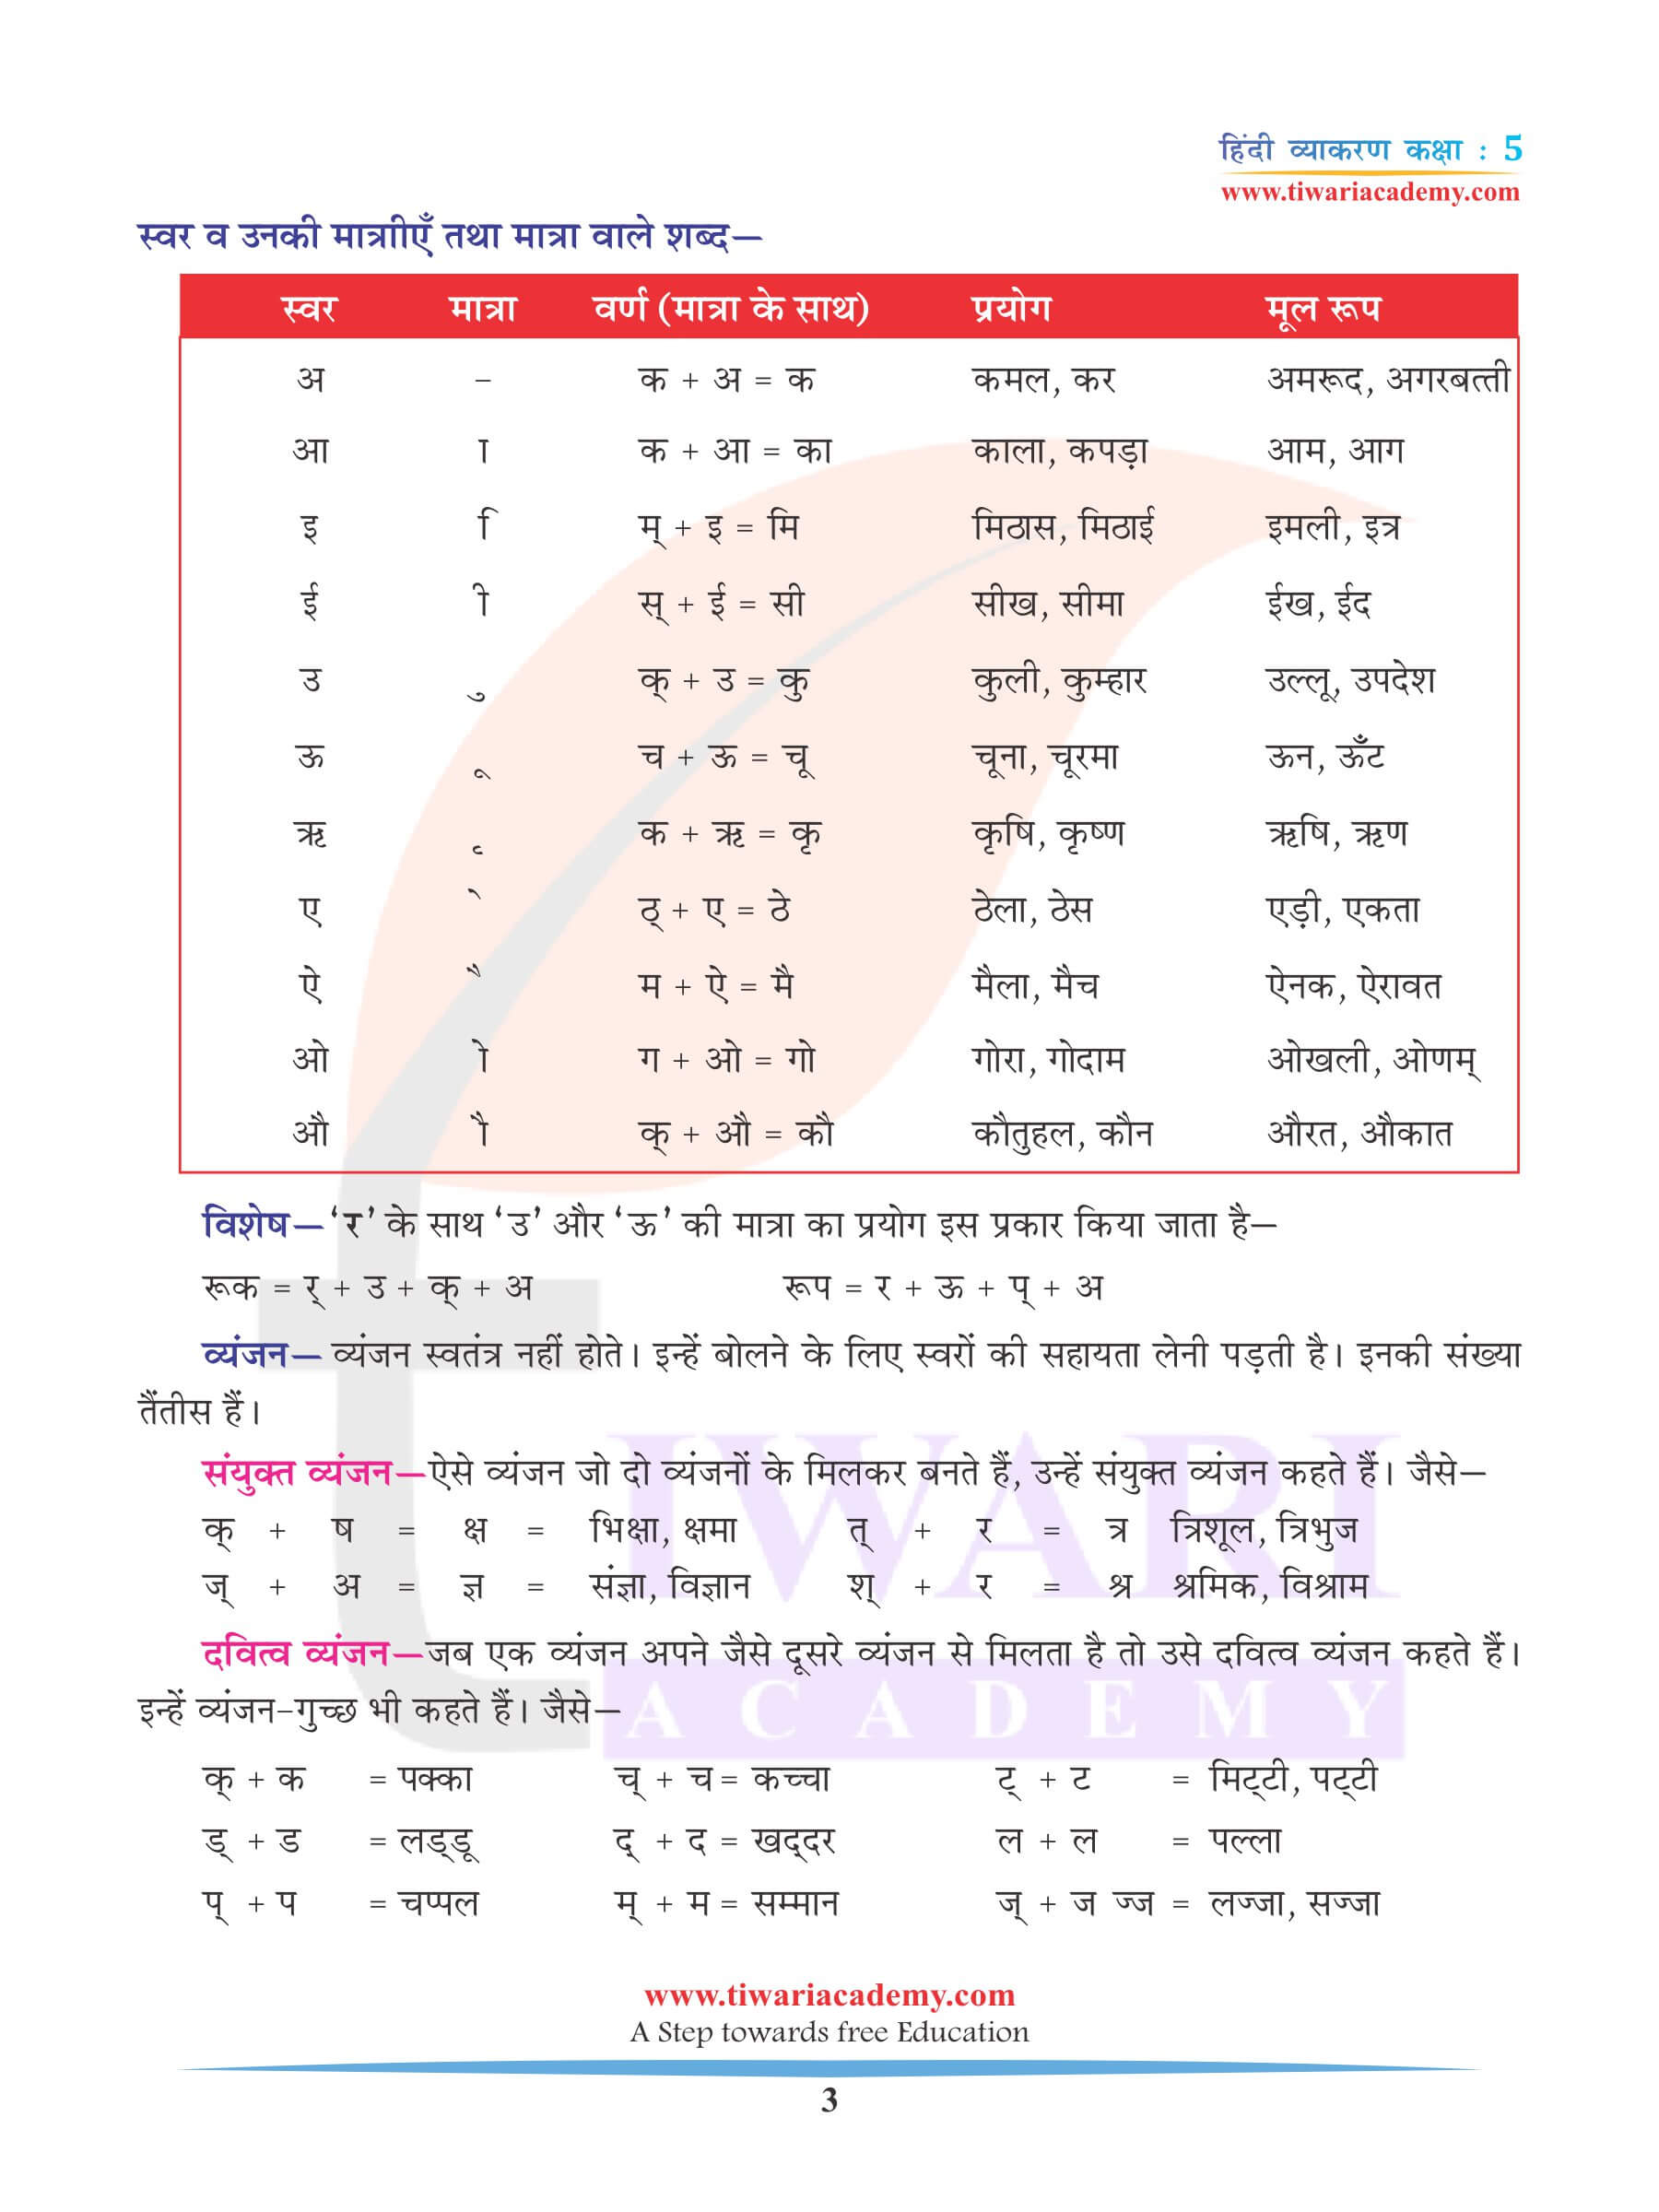 कक्षा 5 हिंदी व्याकरण अध्याय 2 वर्ण विचार के उदाहरण